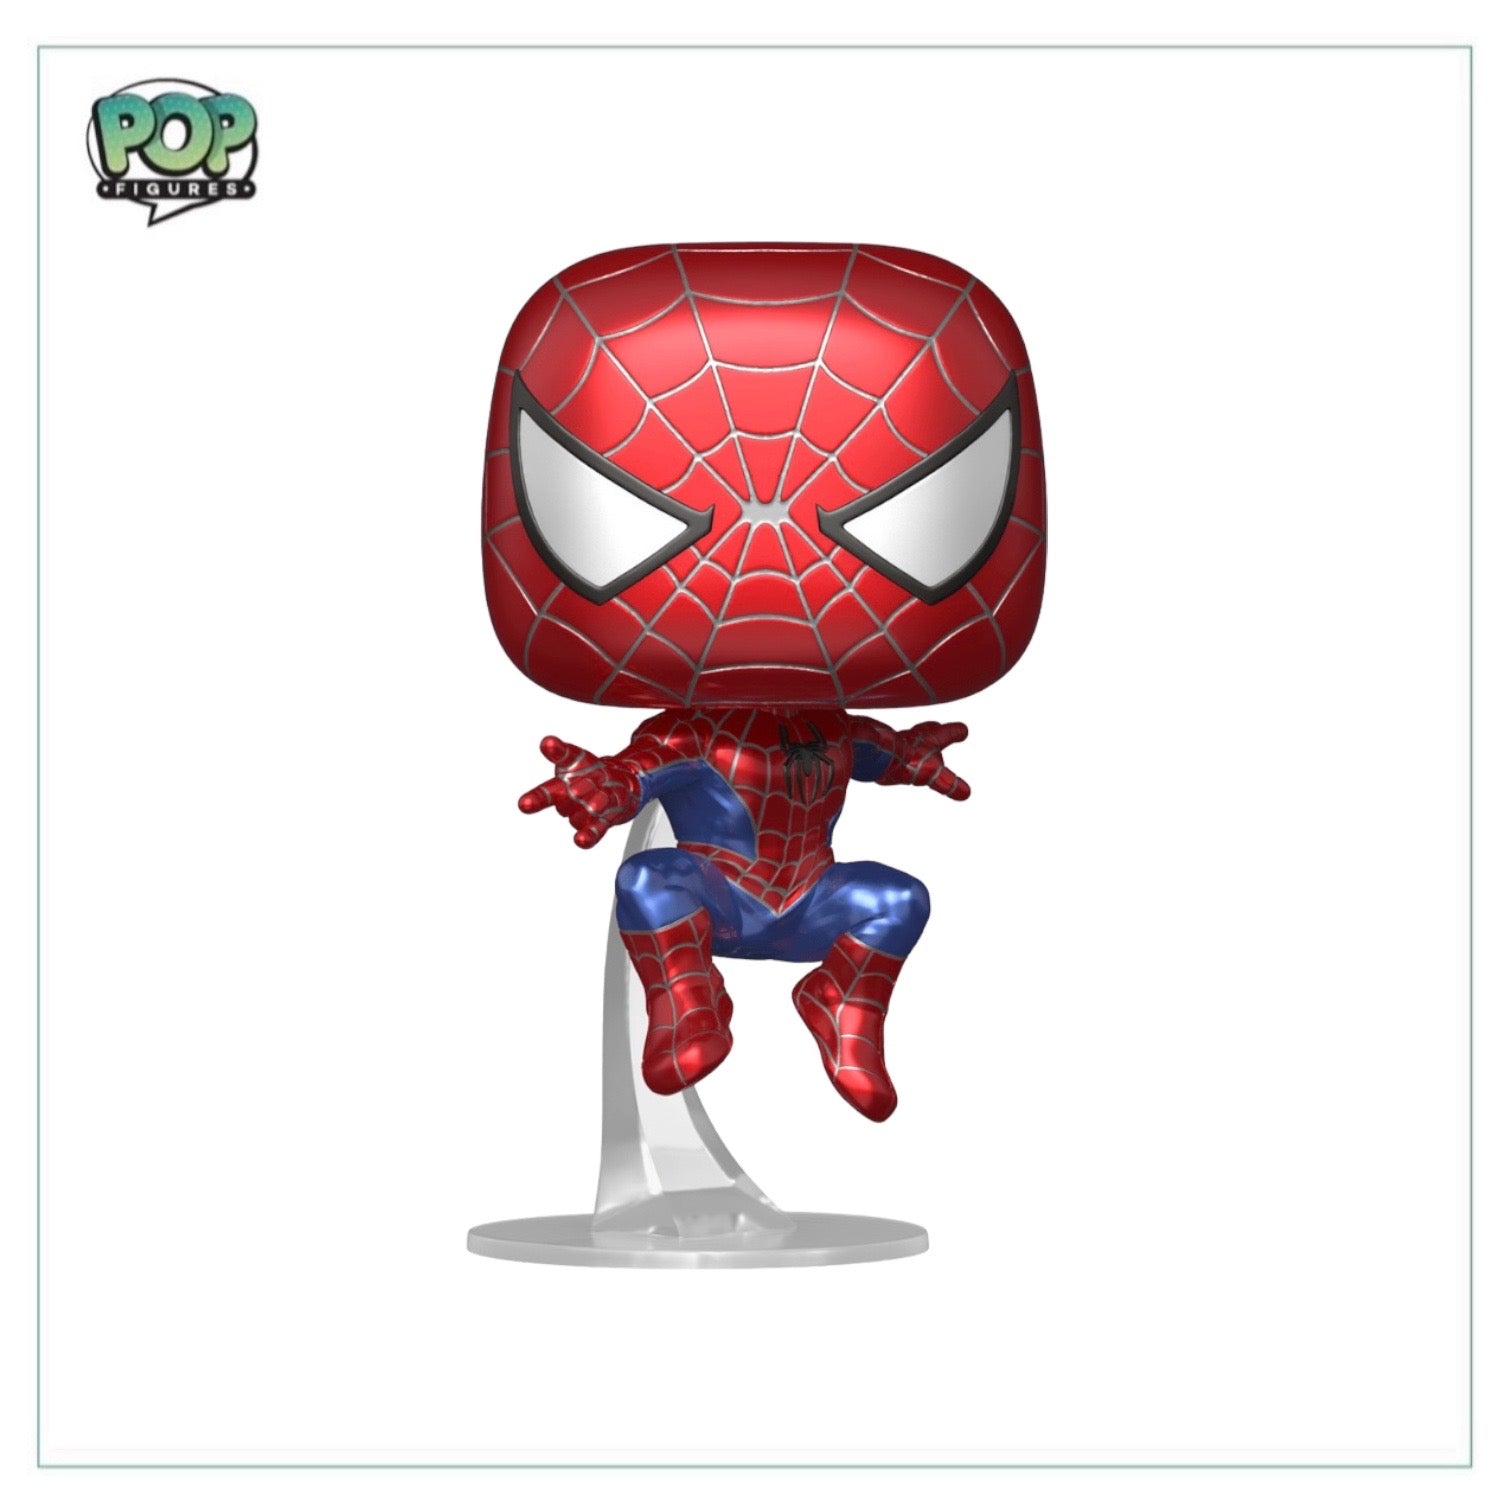 Friendly Neighborhood Spider-Man #1158 (Metallic) Funko Pop! - Spider-Man No Way Home - Hot Topic Exclusive